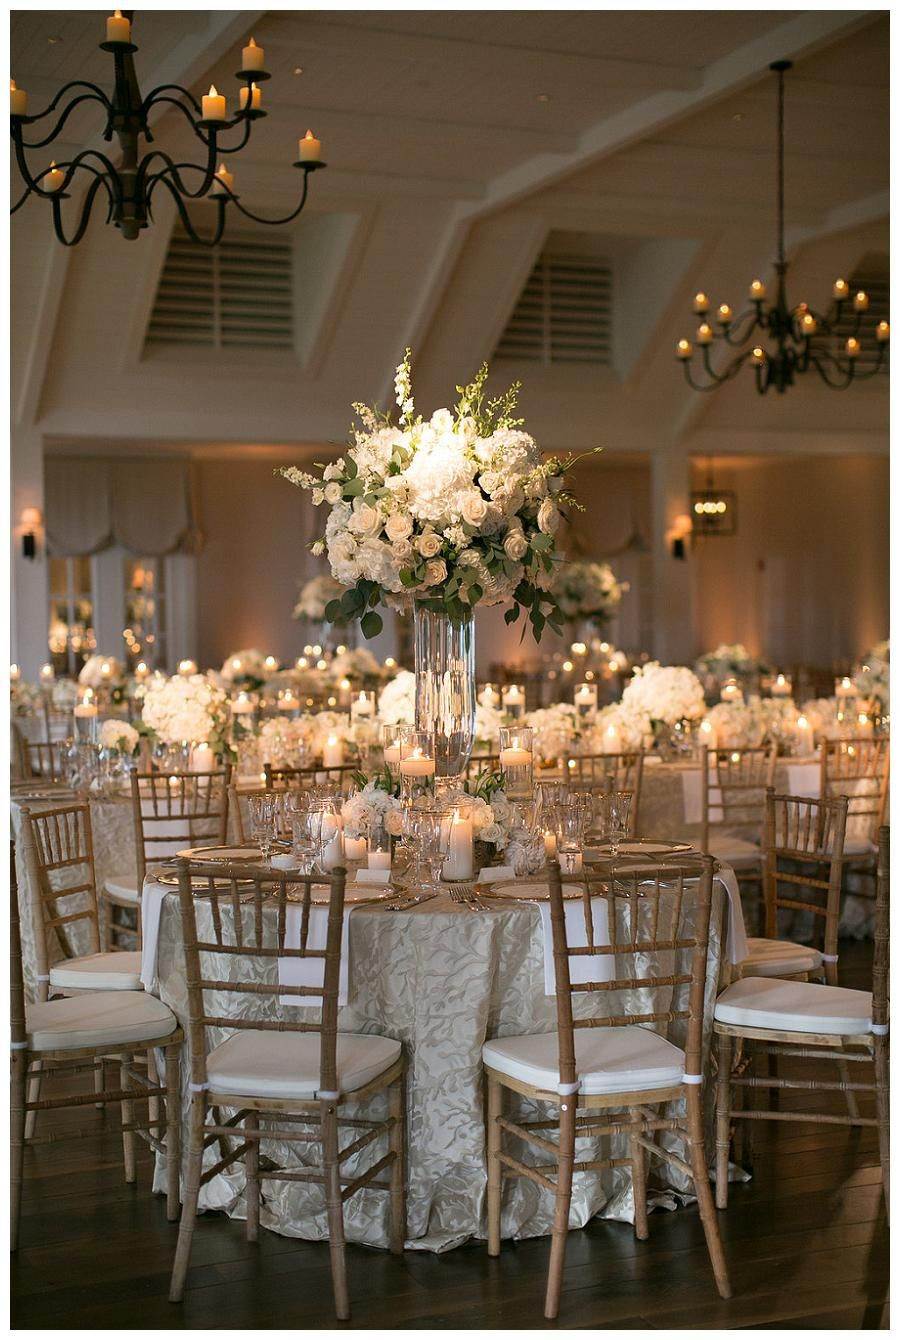 Used Wedding Reception Decorations
 Gold ivory and white wedding reception decor with white